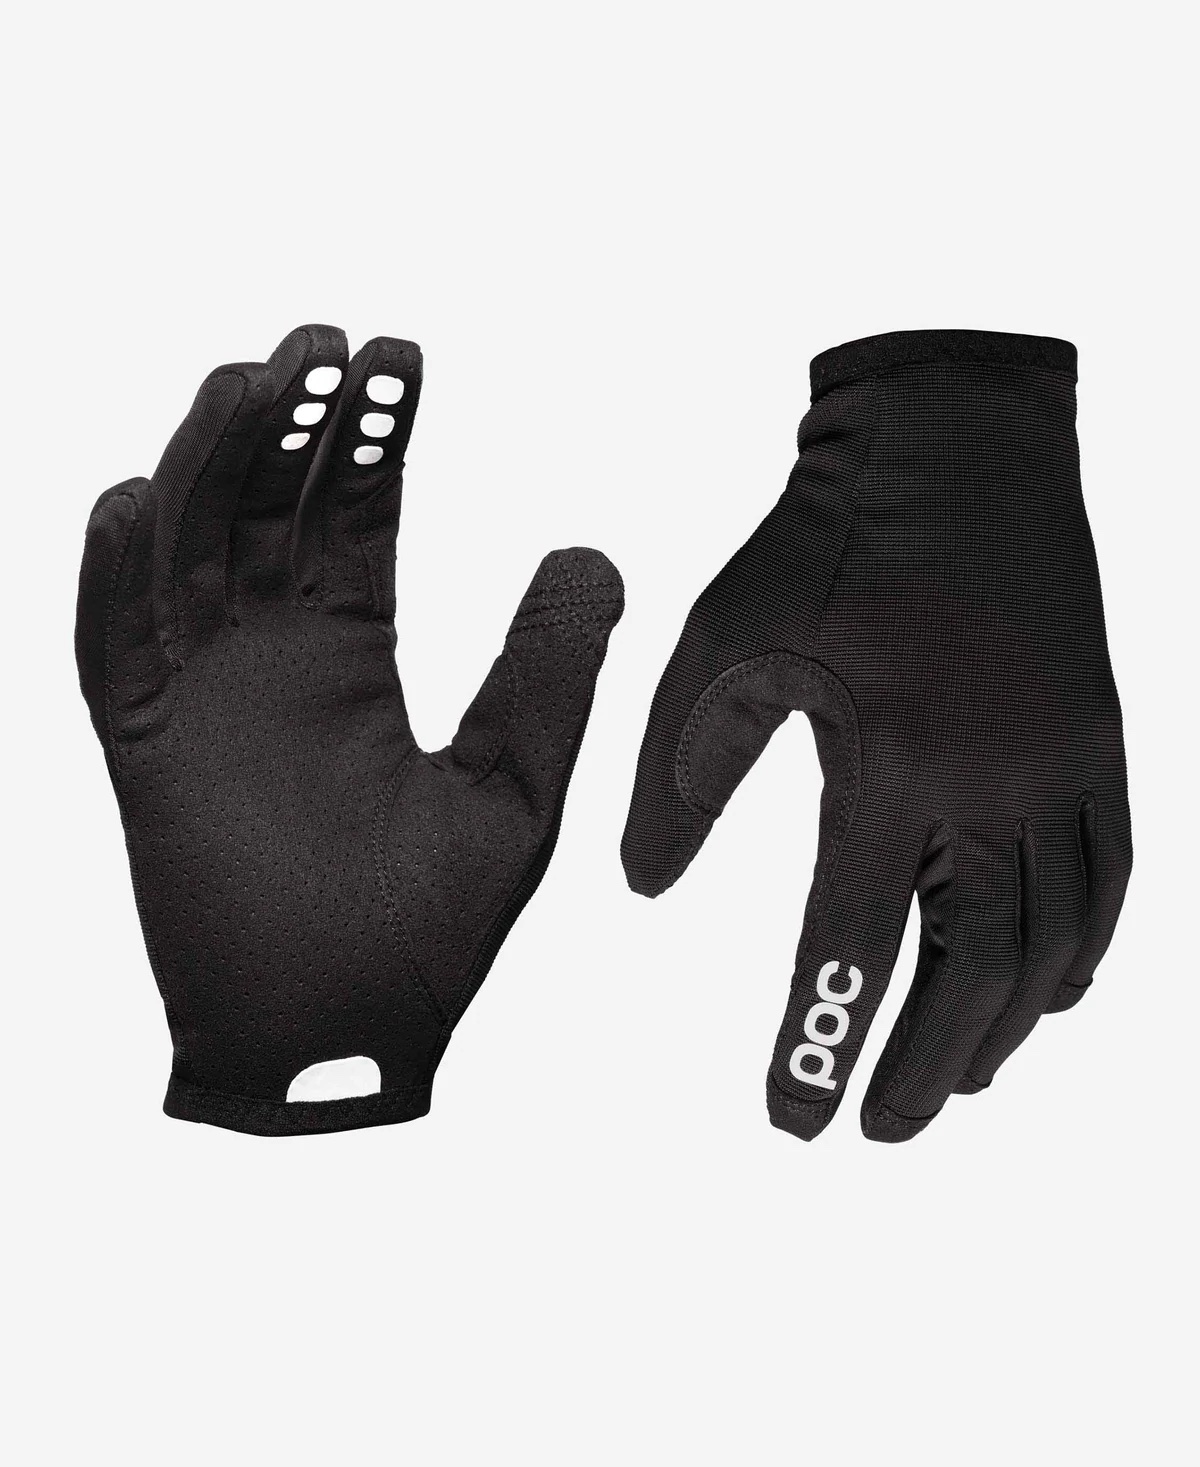 Poc Resistance Enduro Glove